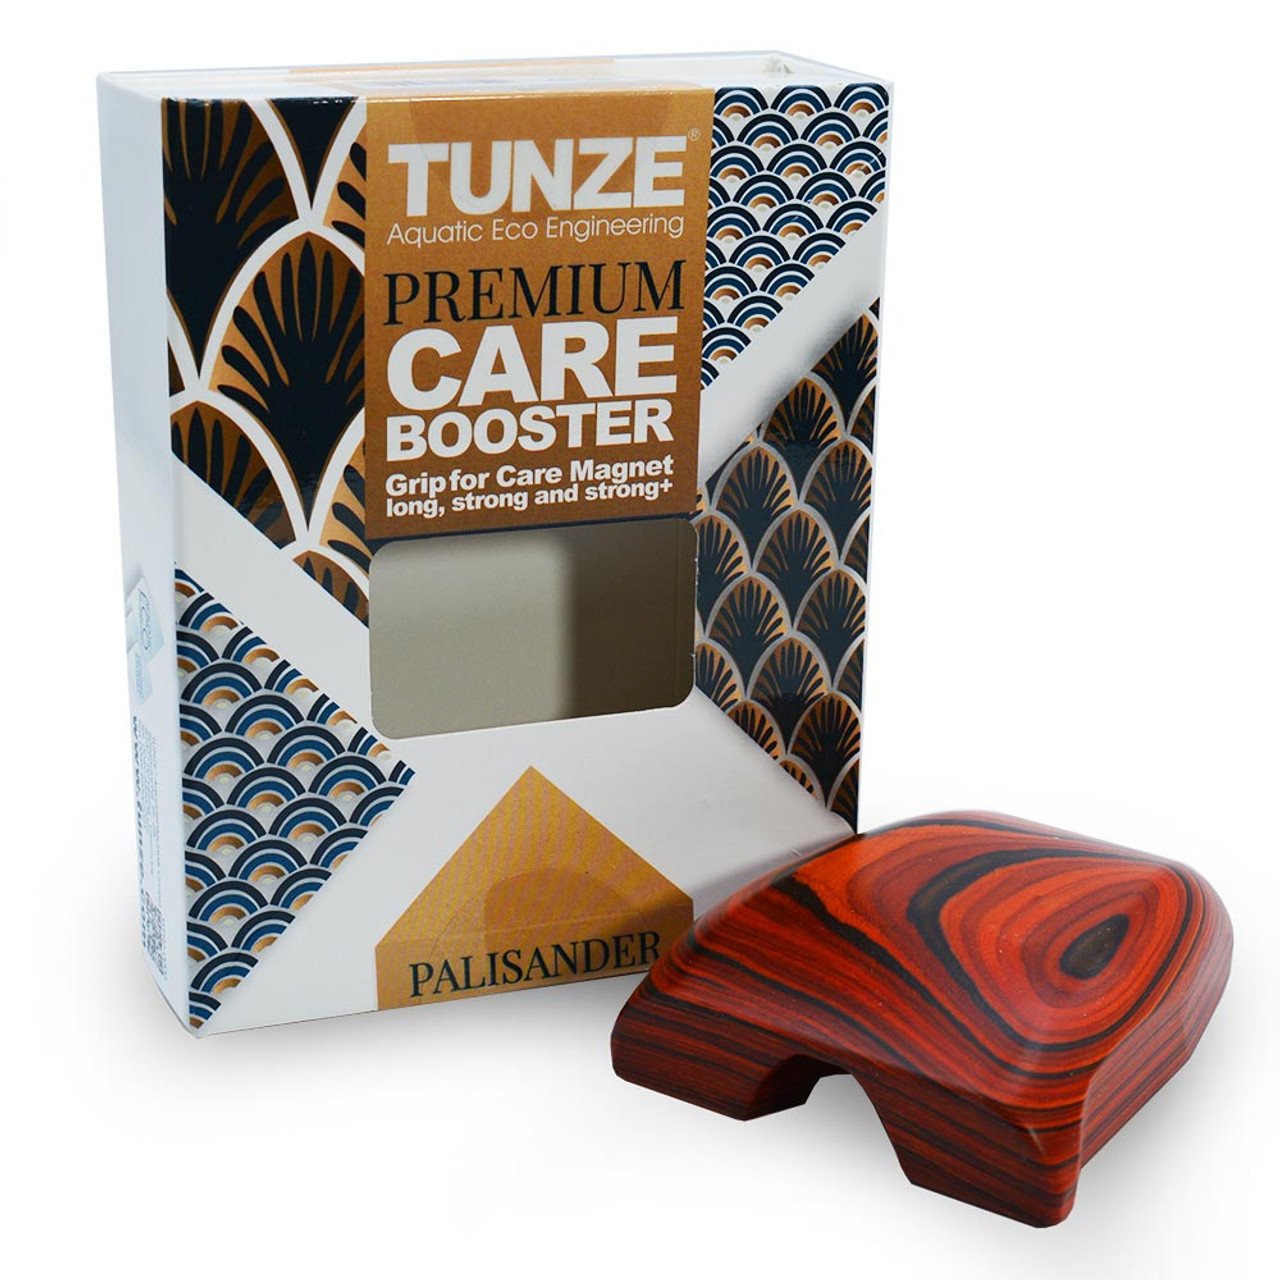 Tunze Care Booster Premium - Palisander (Rosewood)